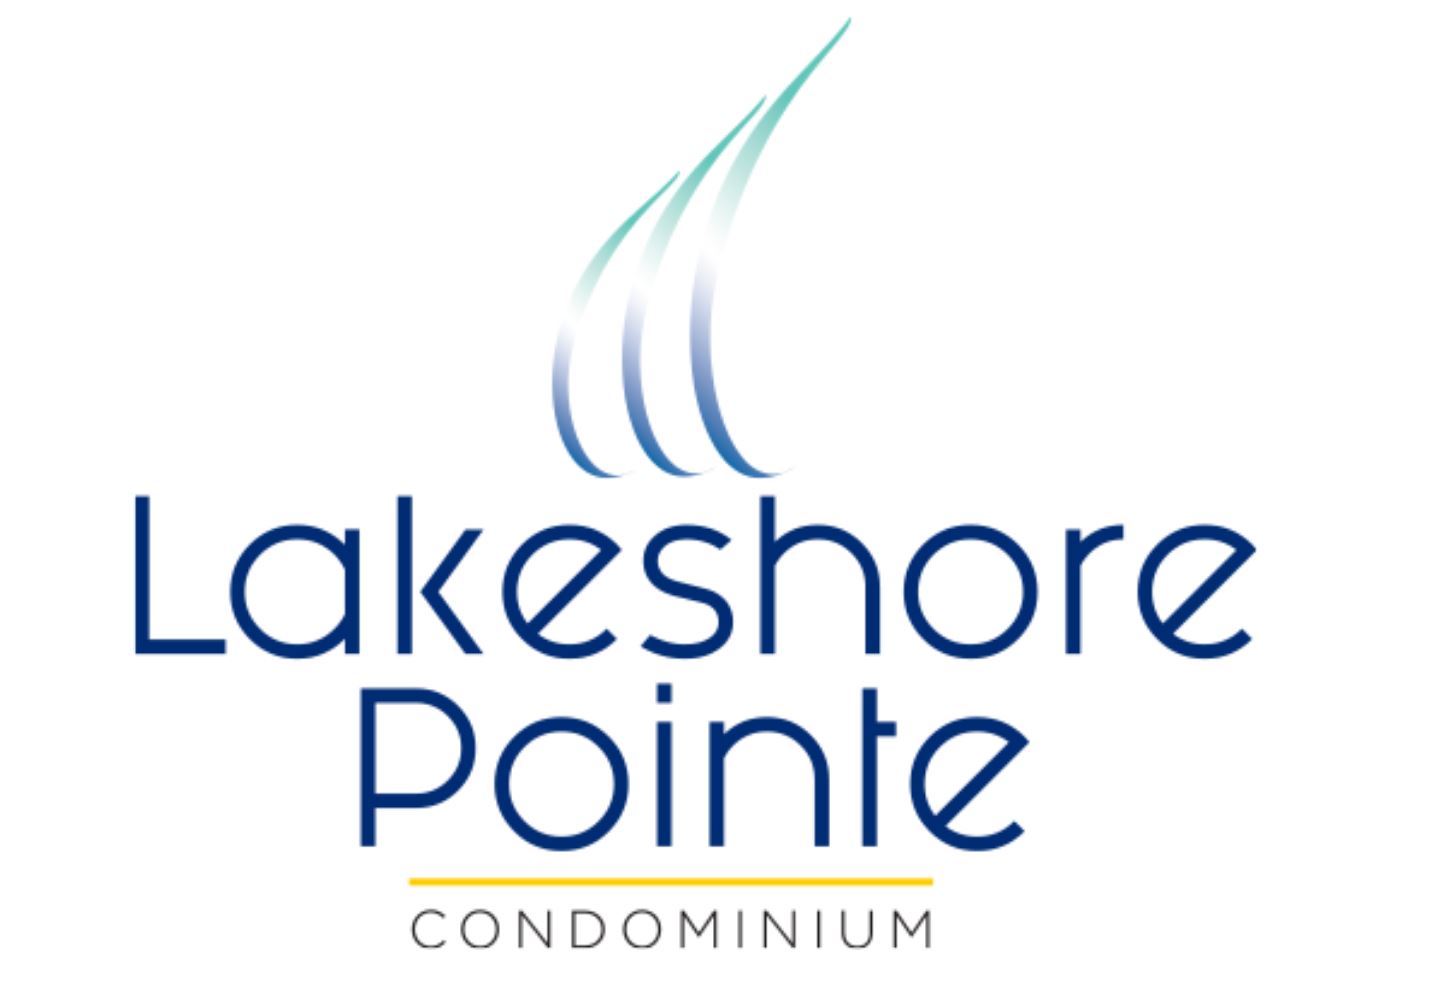 Lakeshore Pointe